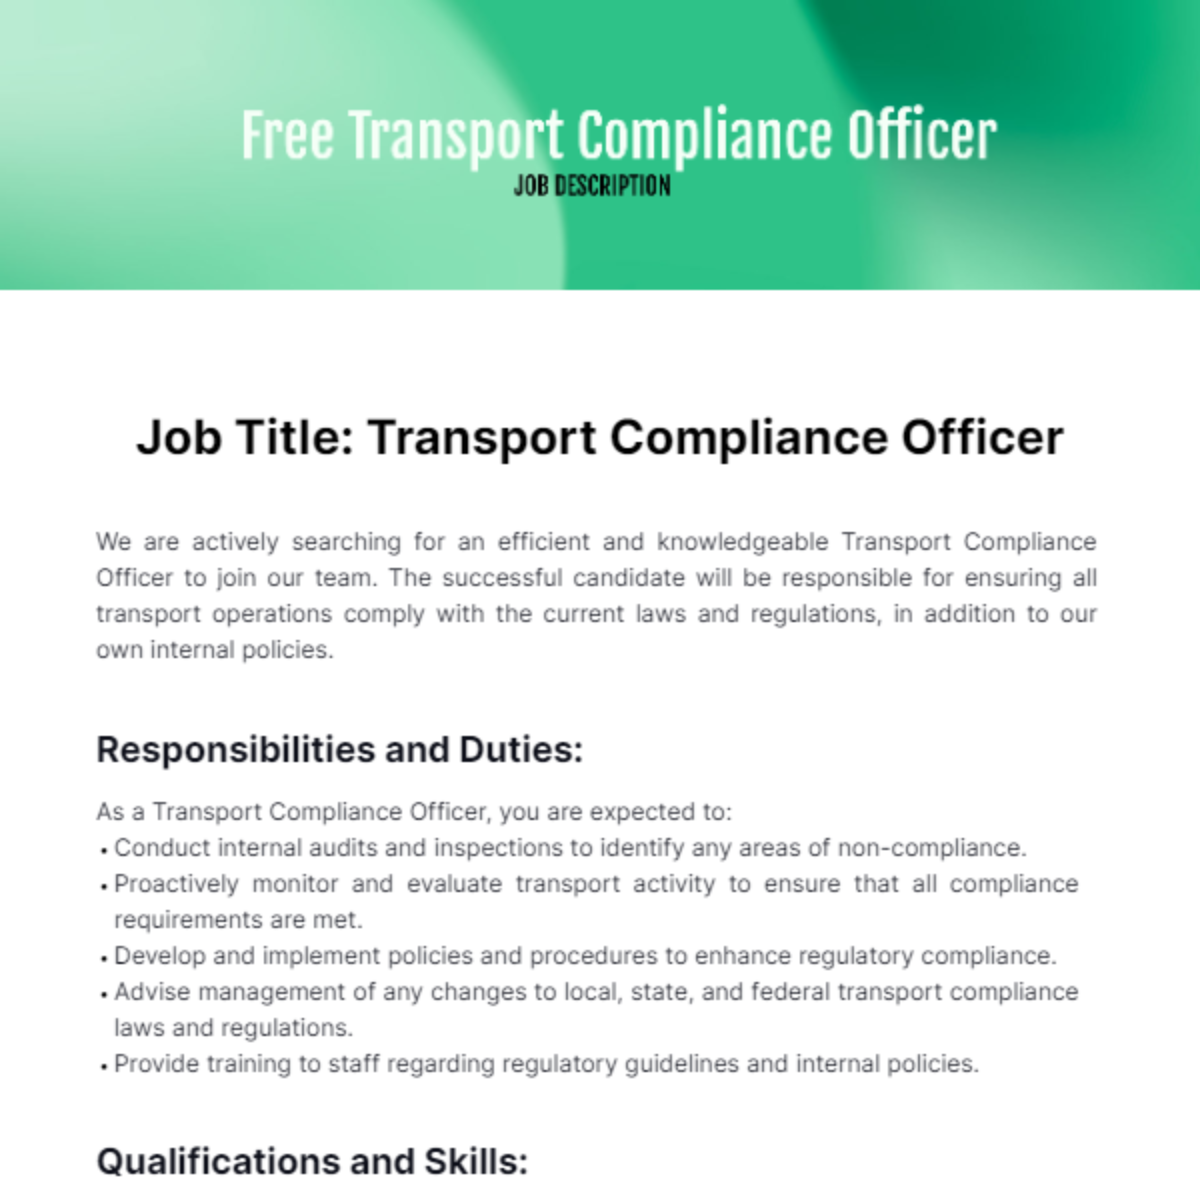 Free Transport Compliance Officer Job Description Template